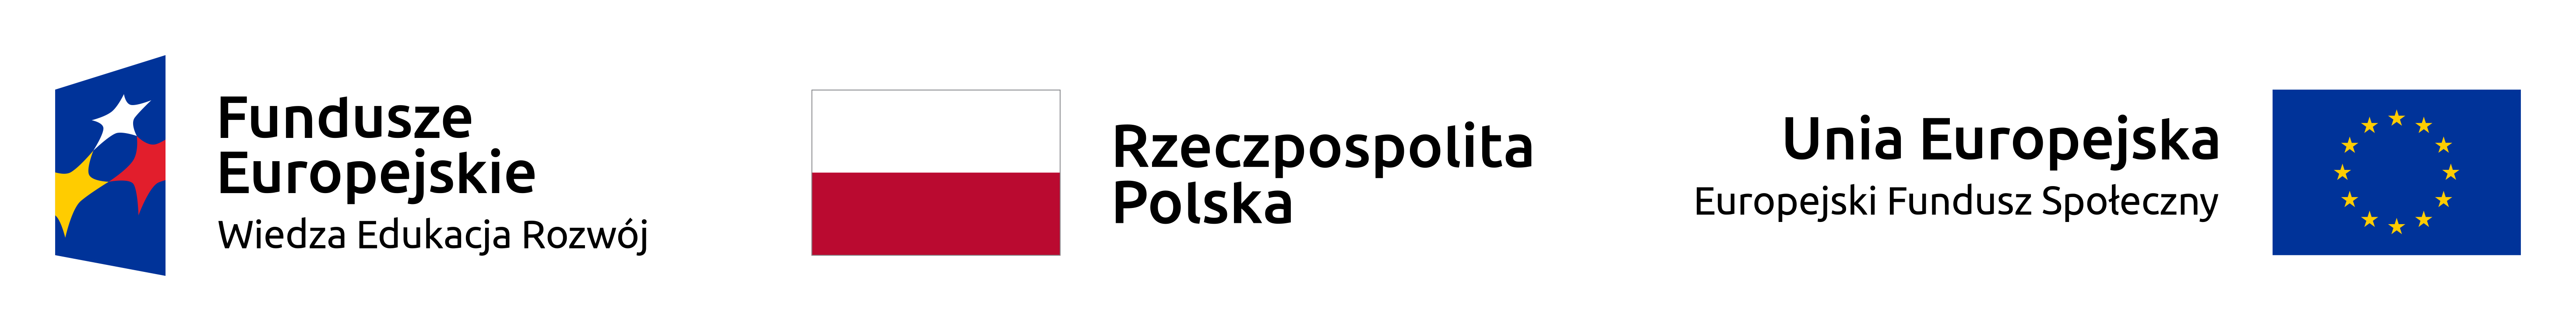 Logo PO WER kolor z flagą Polski